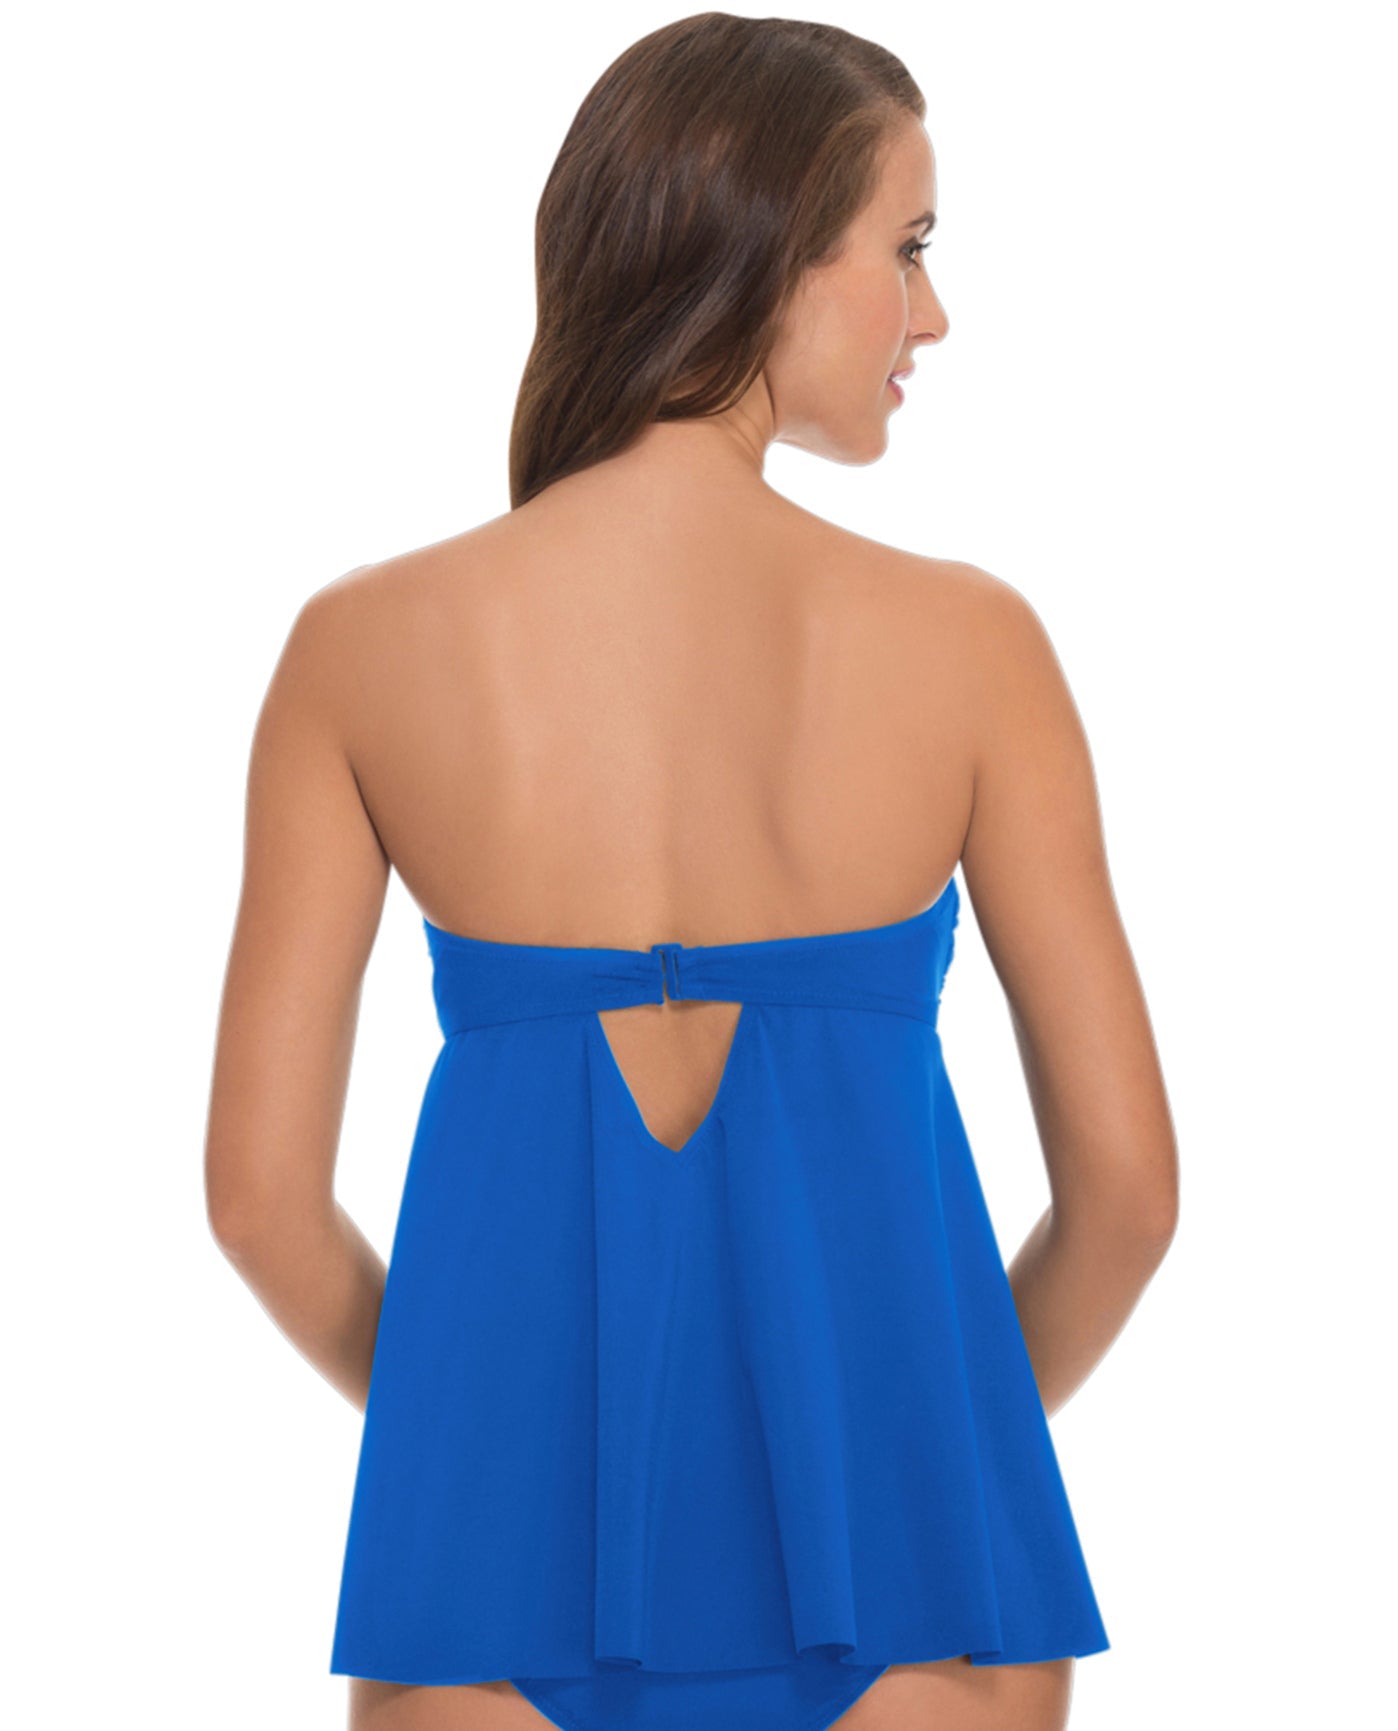 PROFILE TUTTI FRUTTI Halter Bikini Top - Cobalt blue